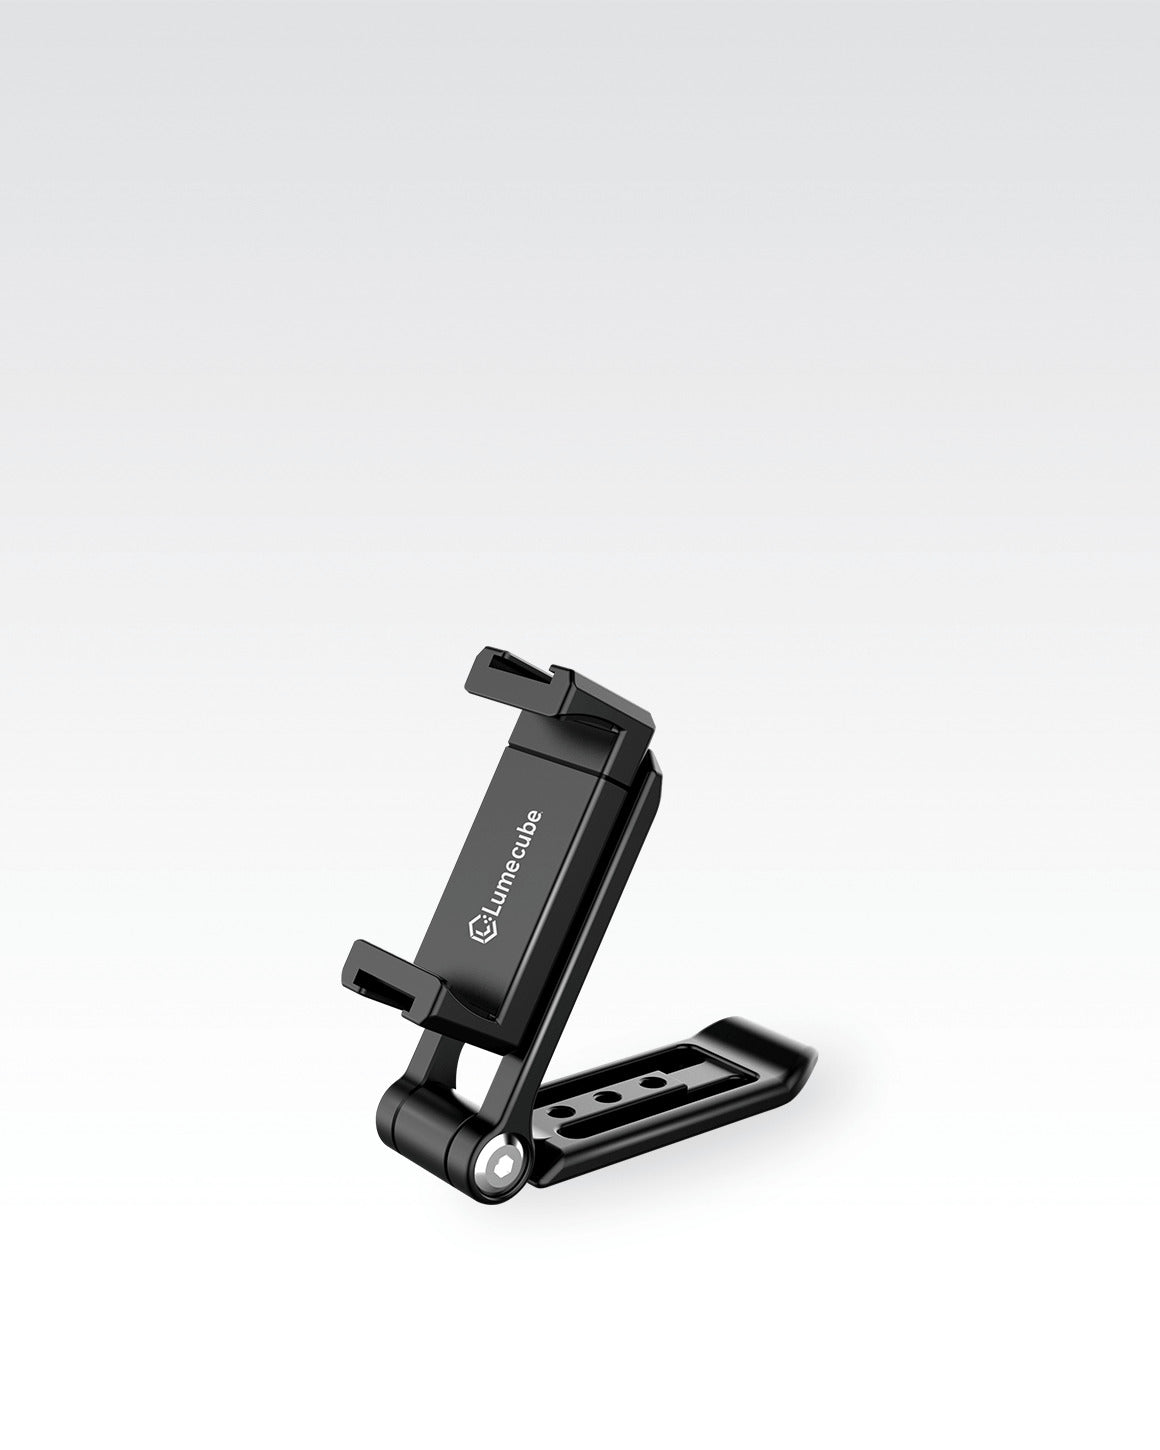 Black aluminum adjustable tilting and twisting Lume Cube Mobile Phone Clip.